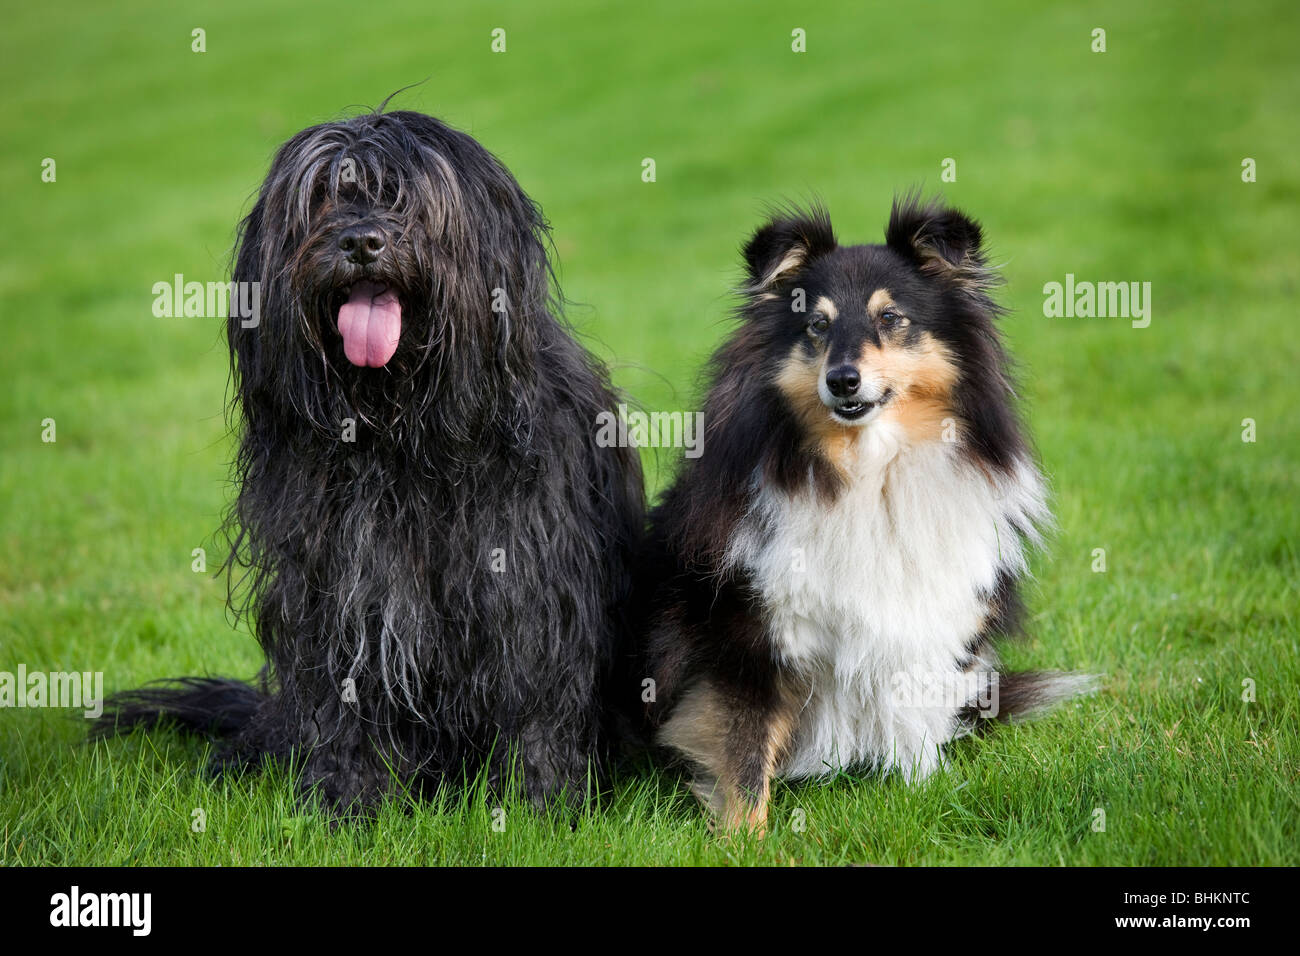 Schapendoes / Dutch Sheepdog and Shetland Sheepdog / collie (Canis lupus familiaris) in garden Stock Photo